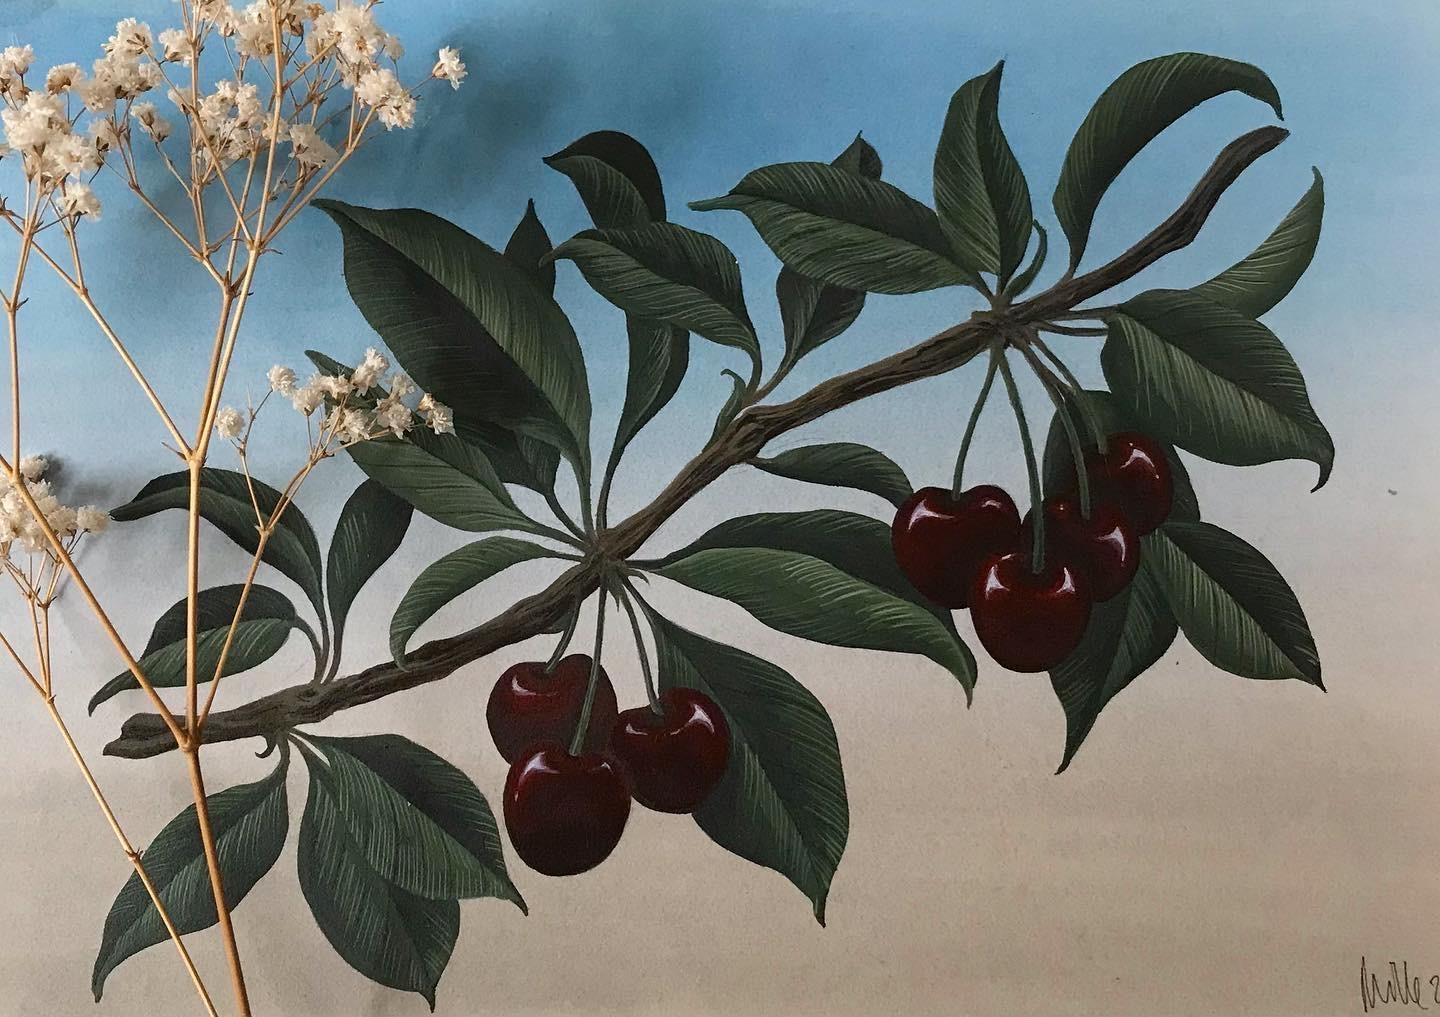 I love botanical art and miss the #summer. So i painted some #cherries 
#artwork #botanicalpainting #kirschen 